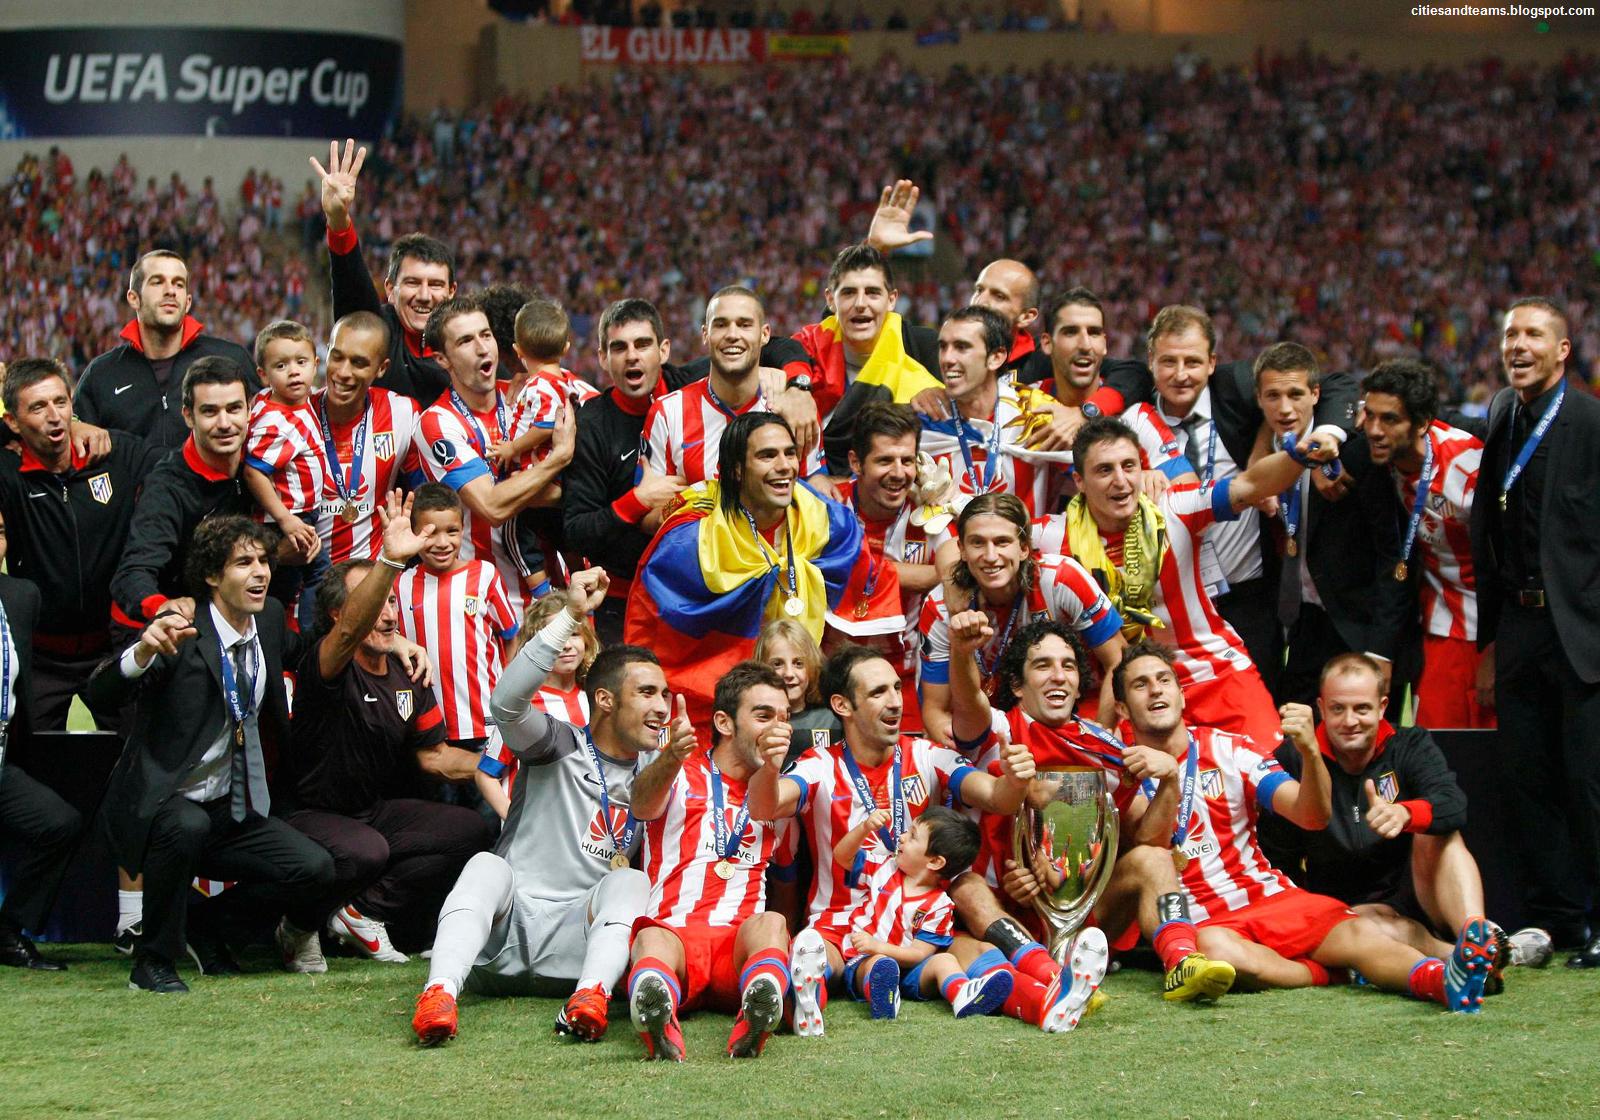 https://blogger.googleusercontent.com/img/b/R29vZ2xl/AVvXsEiyjgkfNZbSFBTjDaY6InHgOx677mTuH2ApMblwBi1Sk3jffkdL3oNrMMZiYtFpBnsMExS50Siv1574rxuLBOH3F3gEWGAaCro5NVDFiCx44Zo2a7q6IPxKB8wr9c2raIA2k4ubQgmlWZ8/s1600/Super_Atletico_Madrid_2012_Uefa_Super_Cup_Champion_Spanish_Team_Spain_Hd_Desktop_Wallpaper_citiesandteams.blogspot.com.jpg